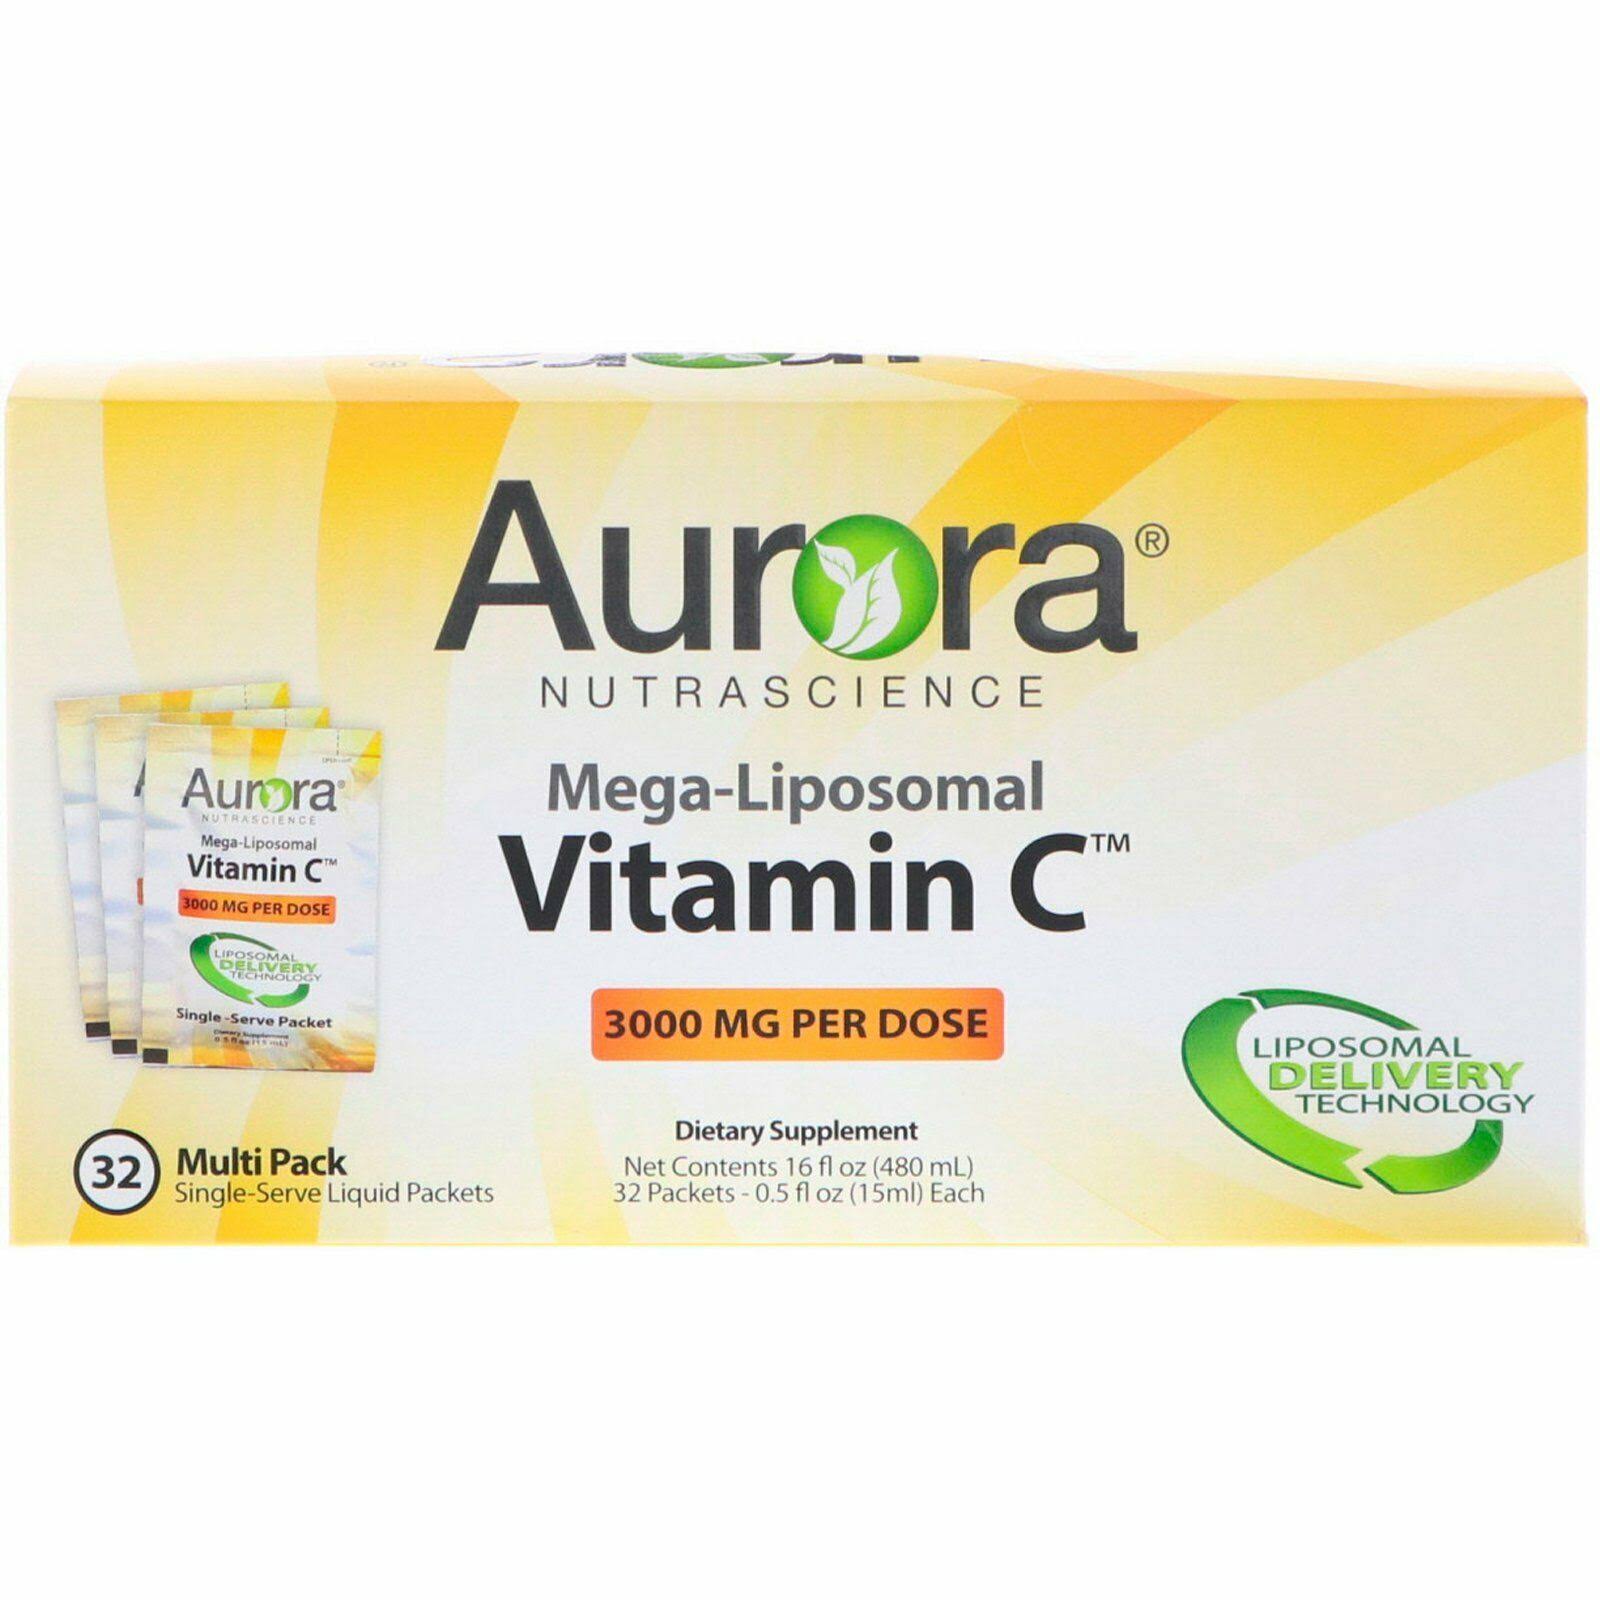 Aurora Nutrascience Mega-liposomal Vitamin C - 3000mg, 32 Packets, 15ml